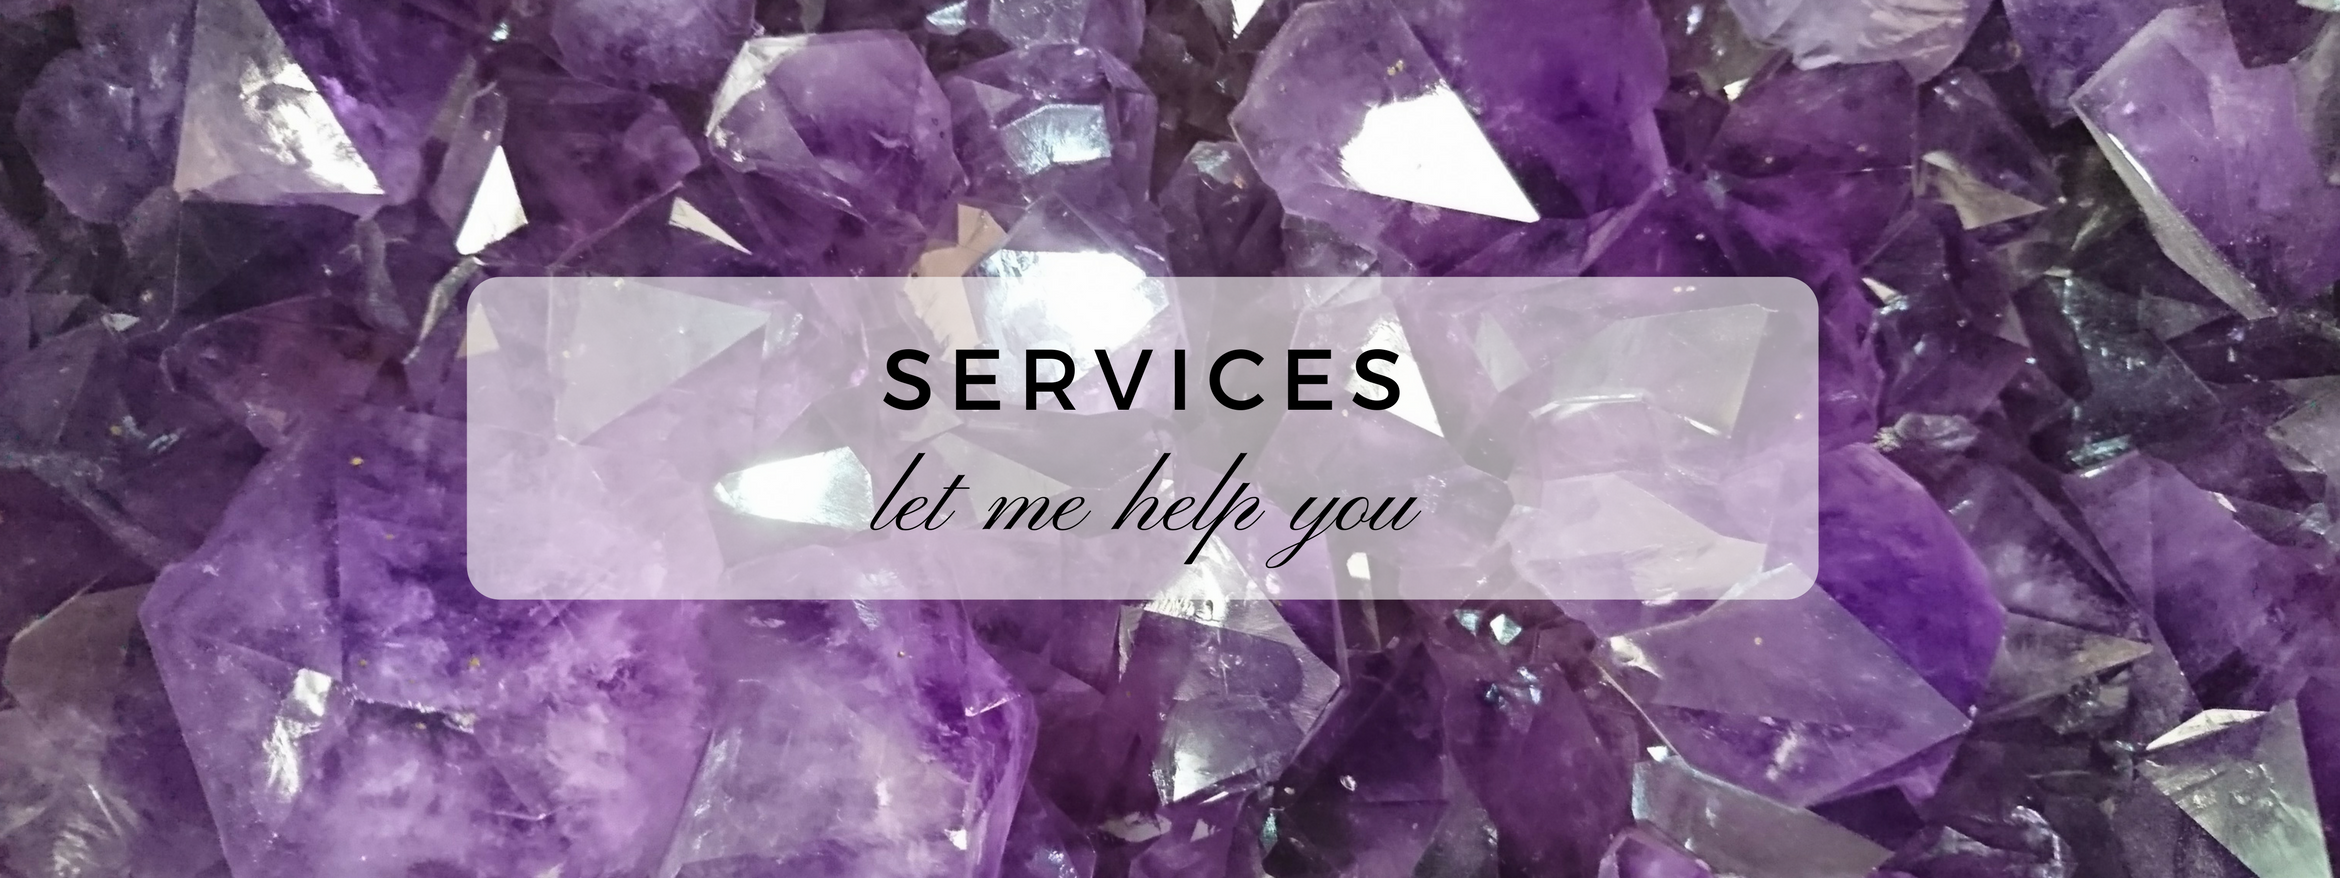 Services - let me help you